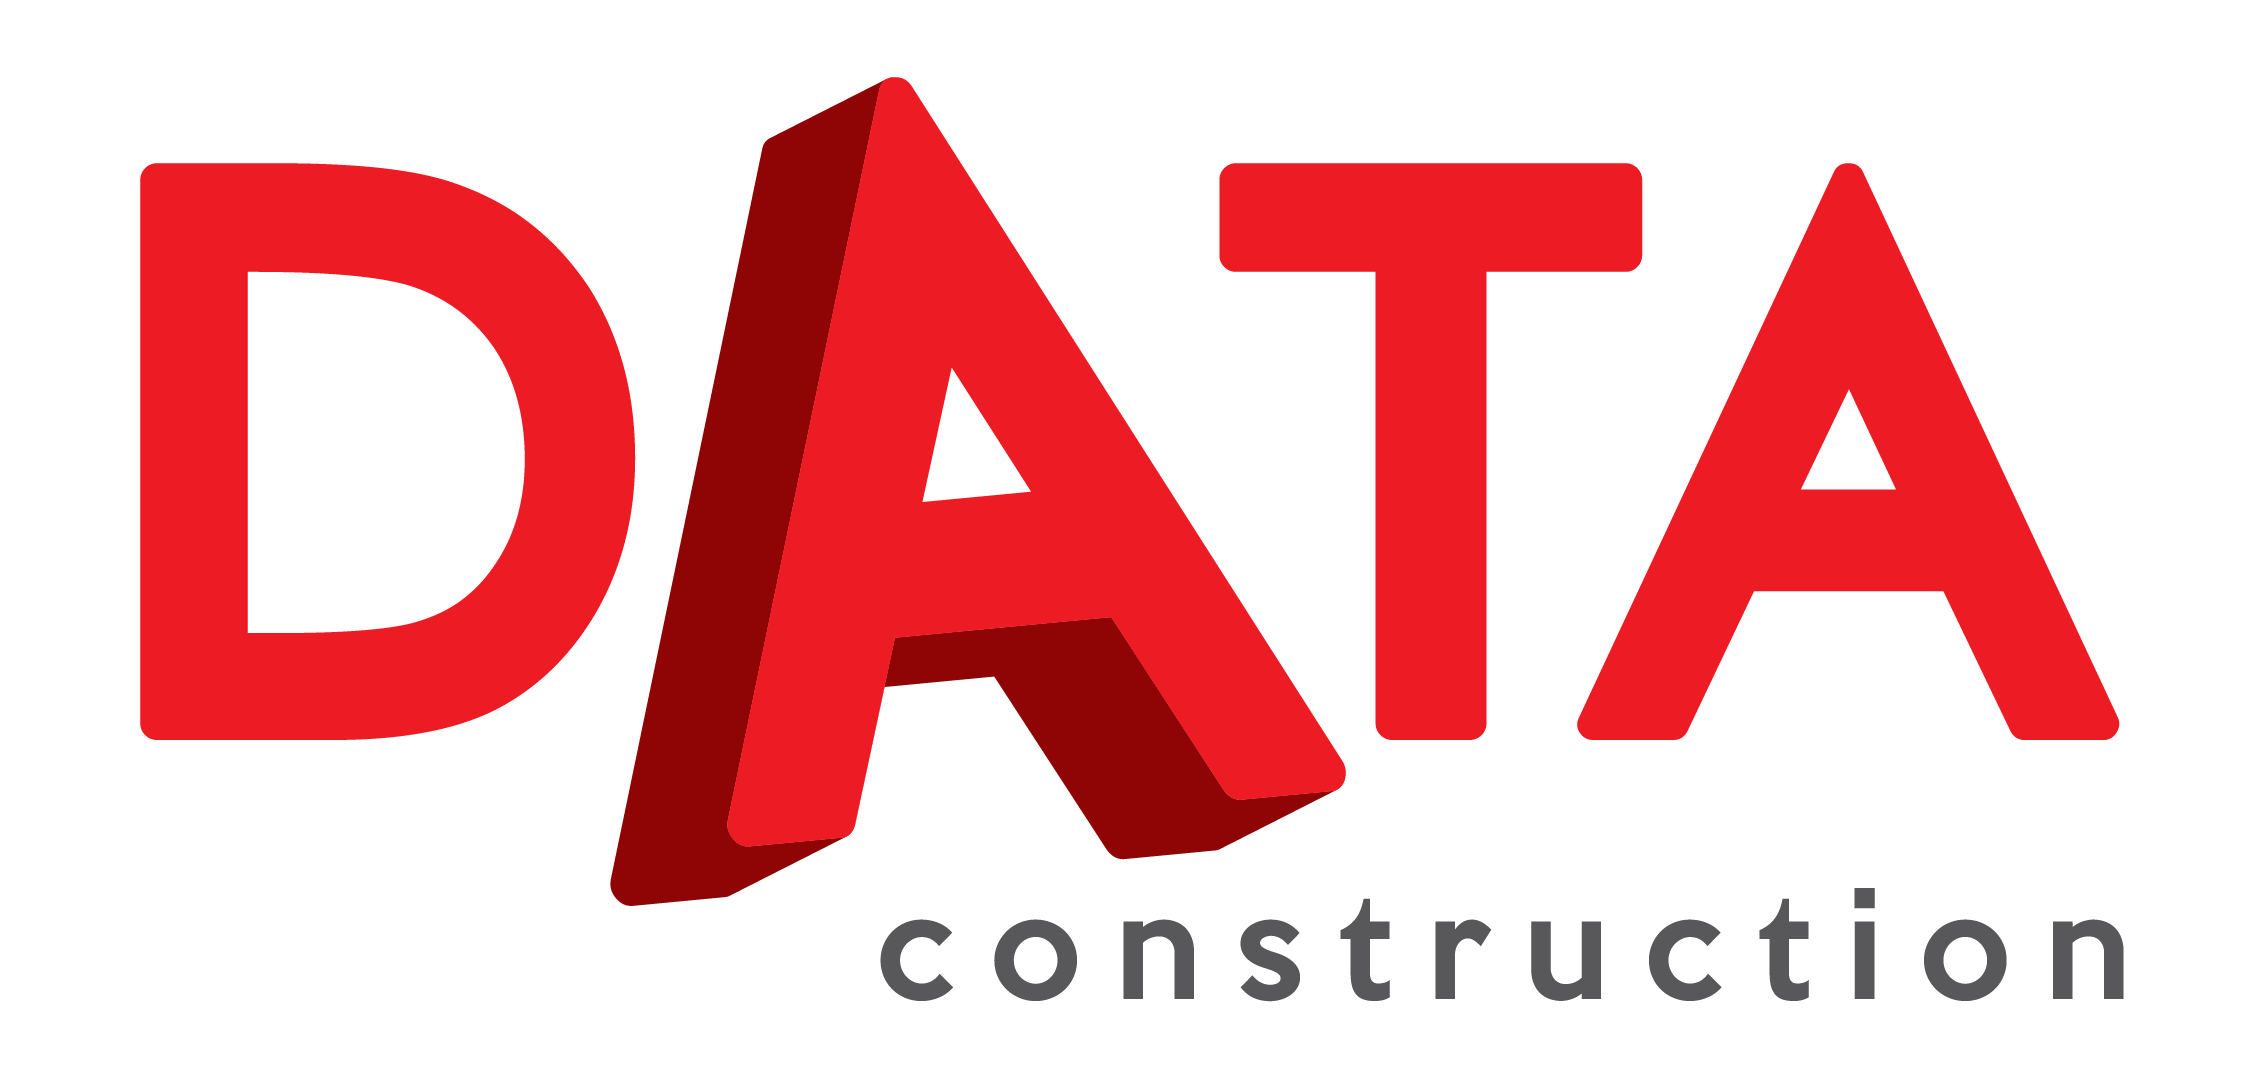 Datacons - GESTAL Distributor 